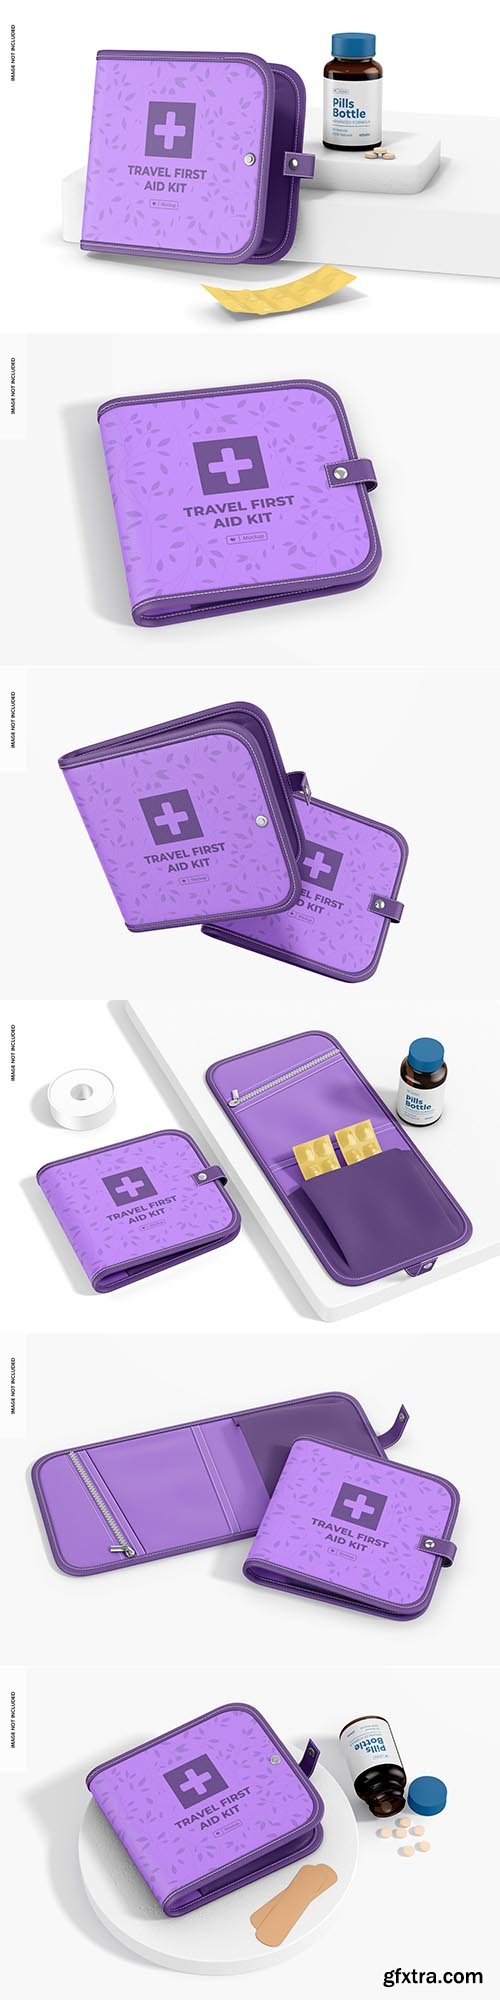 Travel first aid kit mockup